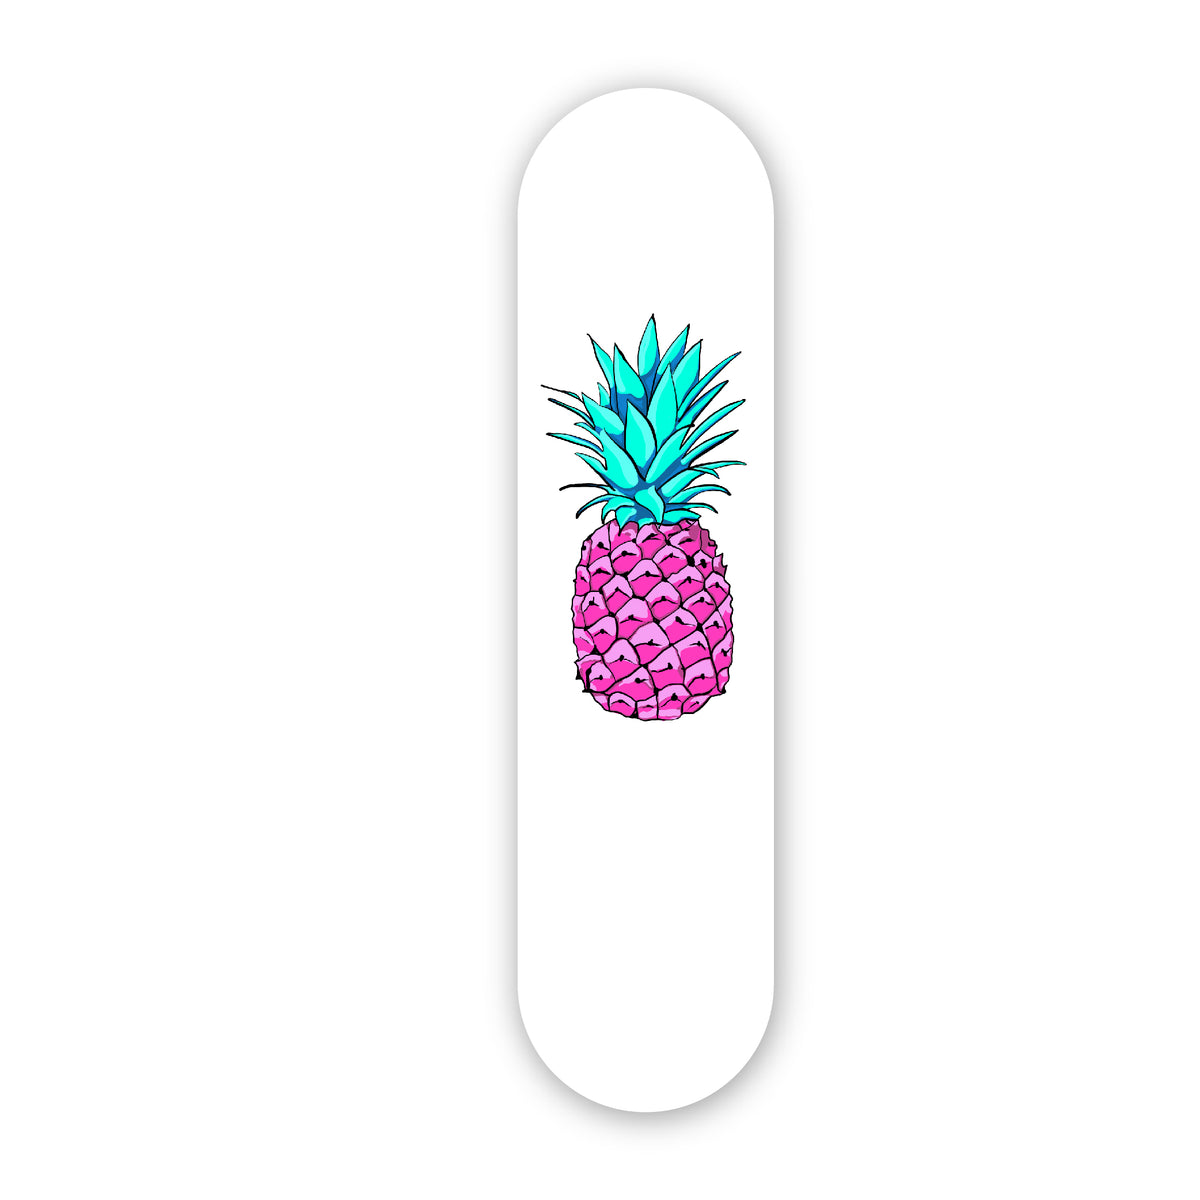 Wall Art of Retro Pineapple Skateboard Design in Acrylic Glass - Retro